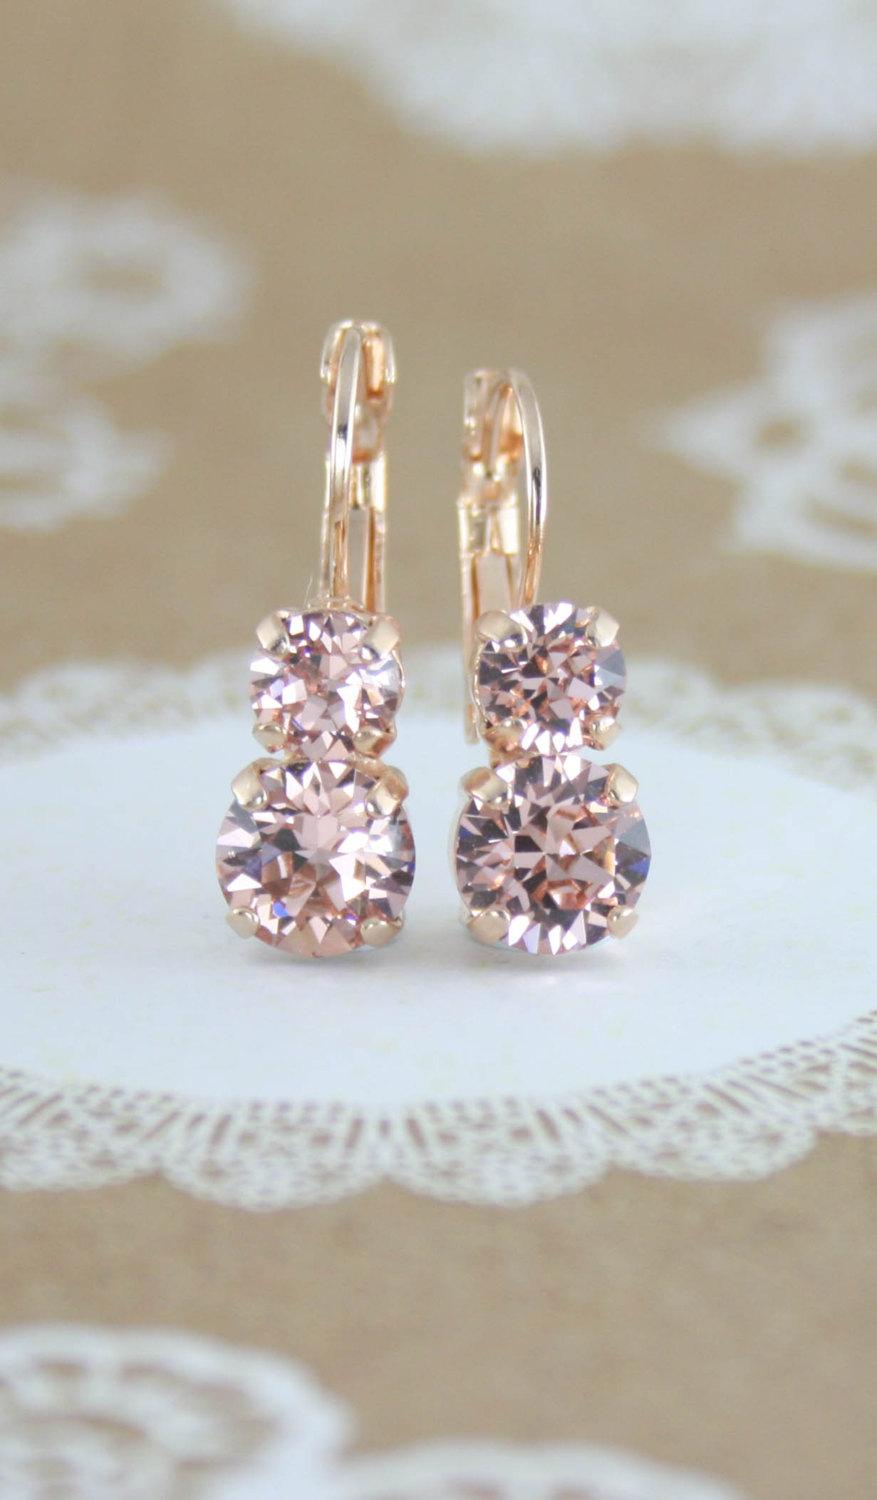 زفاف - Blush earrings,blush crystal earrings,blush bridesmaid earrings,swarovski blush,rose gold earrings,rose gold blush earrings,blush wedding